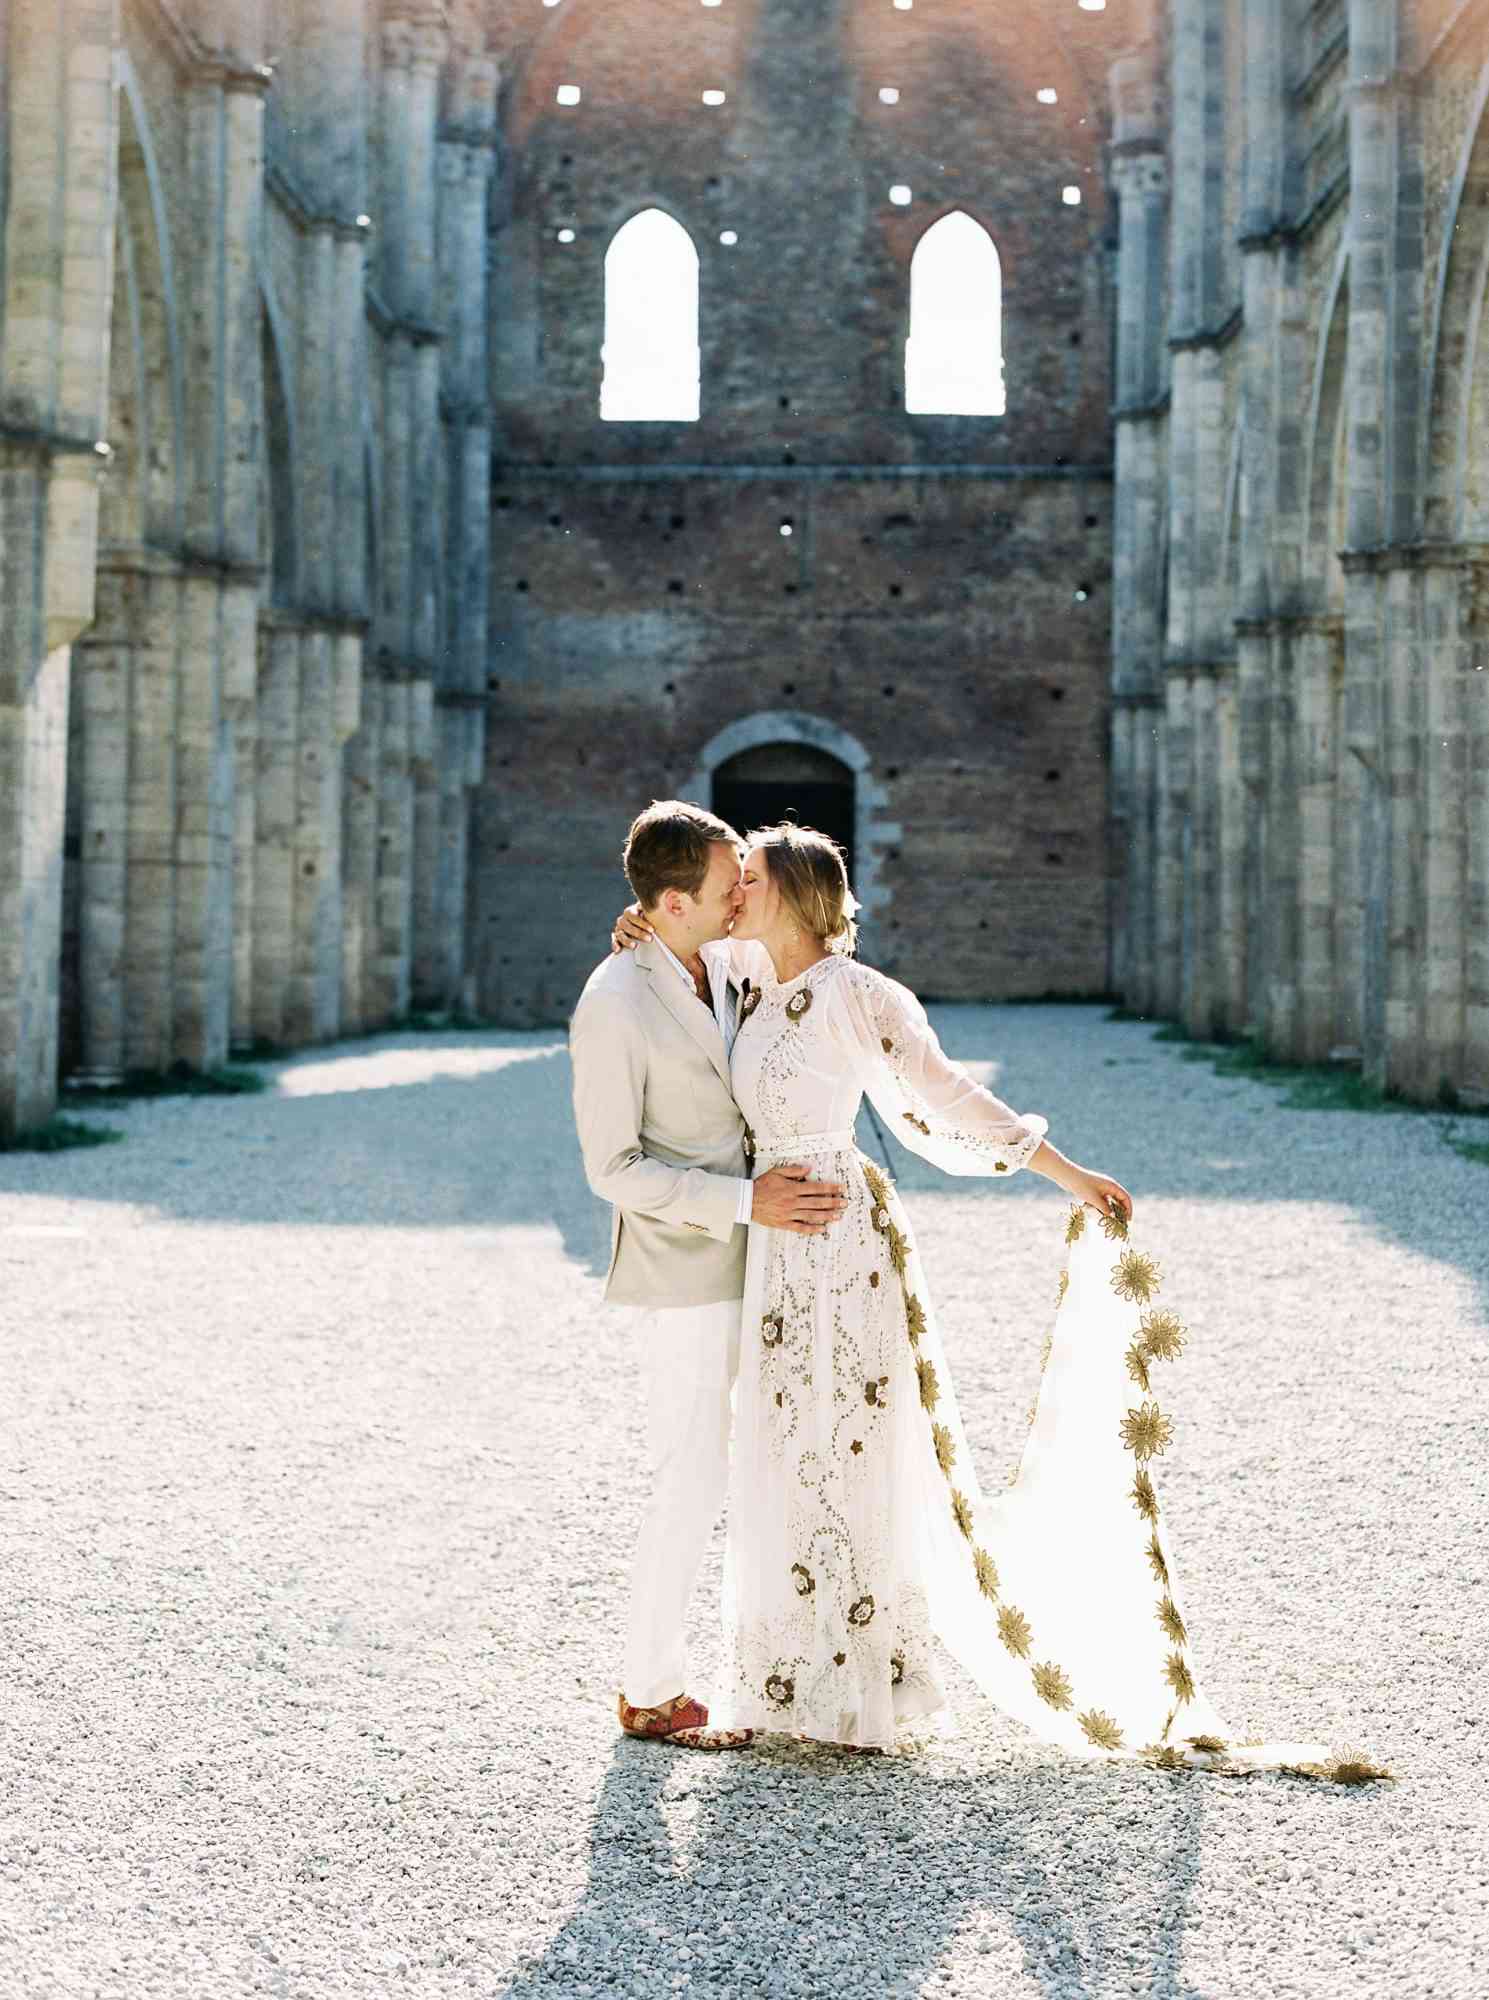 alexis zach wedding italy couple kiss dress